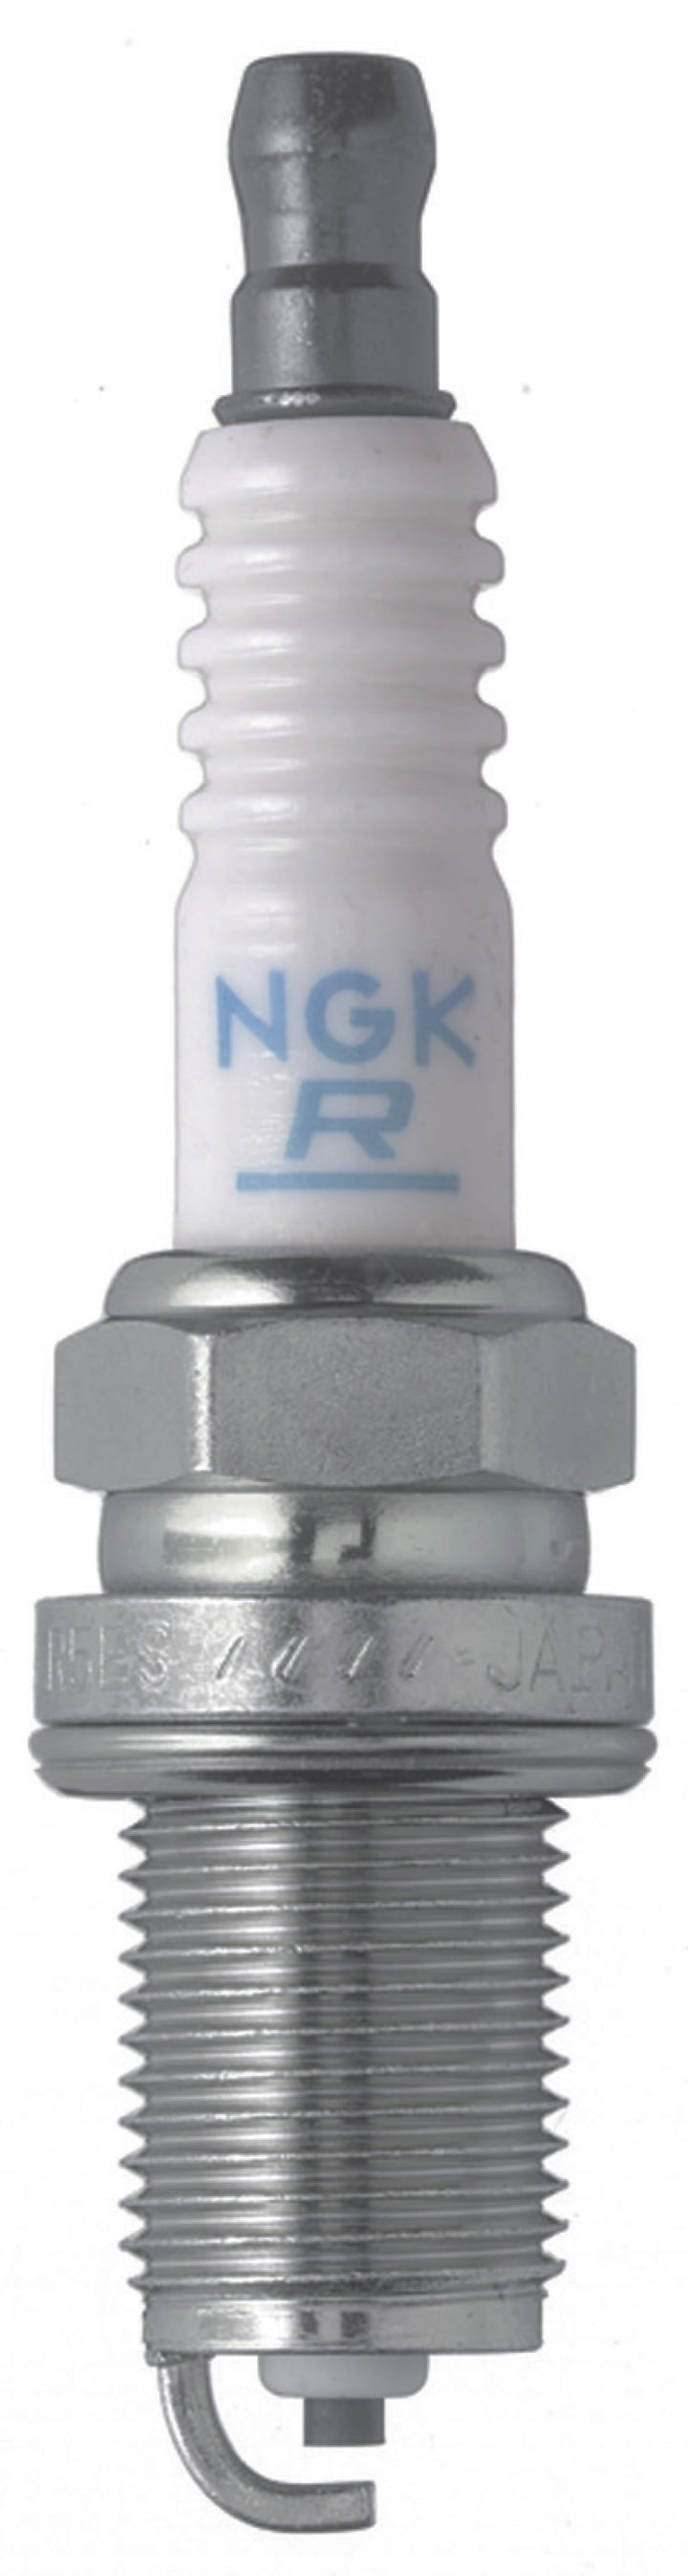 NGK V-Power Spark Plug Box of 4 (BKR6E).